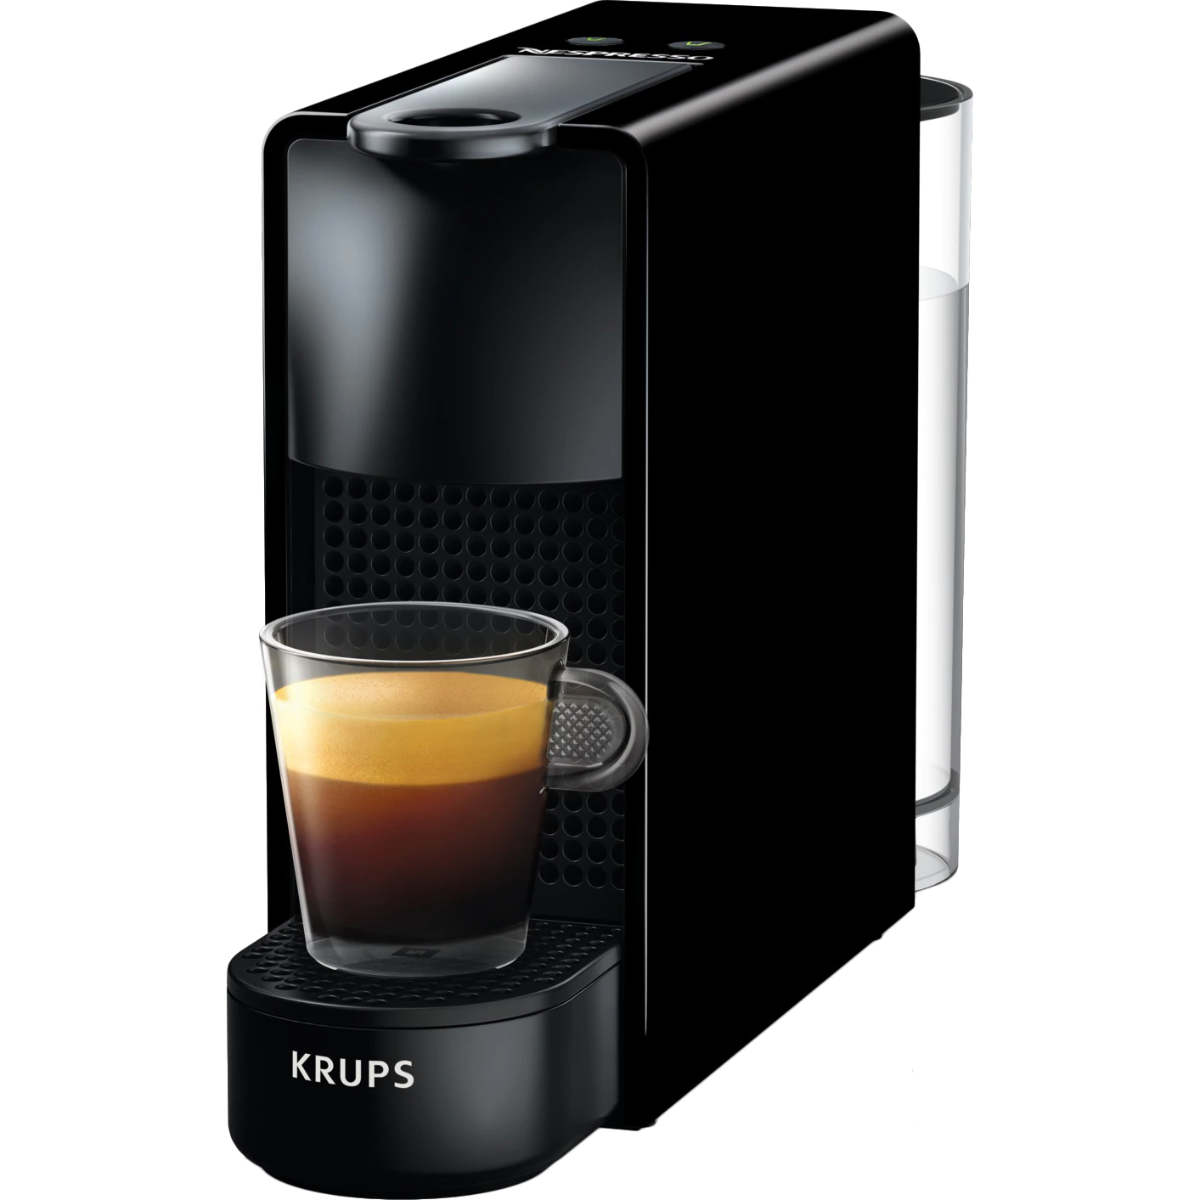 Espressor Nespresso by Krups Essenza Mini, 1300W, 19 bar, 0.6L, Negru